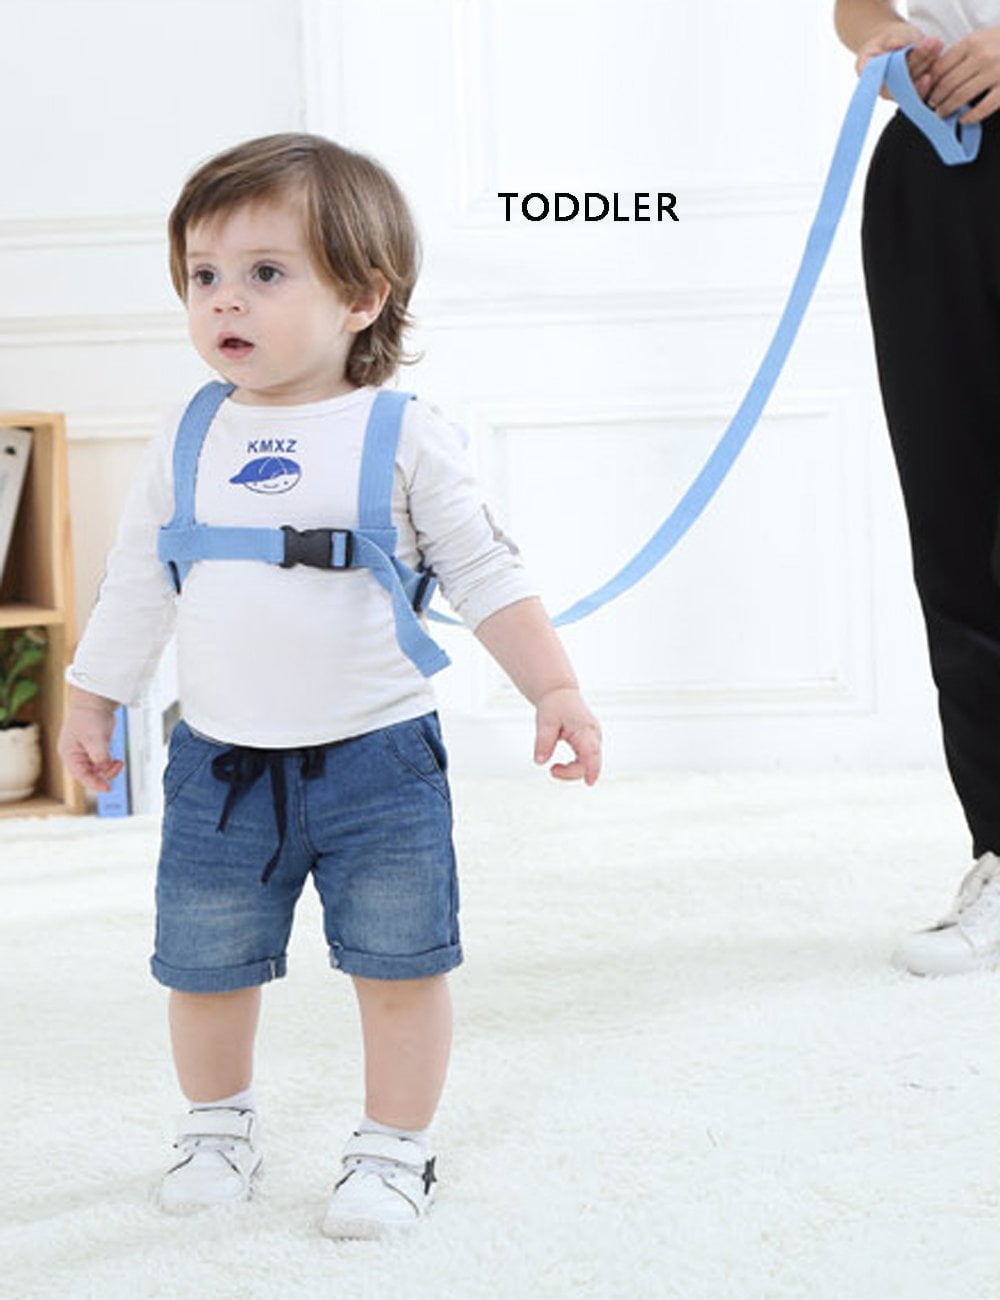 Kids Baby Safety Anti-lost Strap Walking Harness Toddler Wrist Band Leash Belt